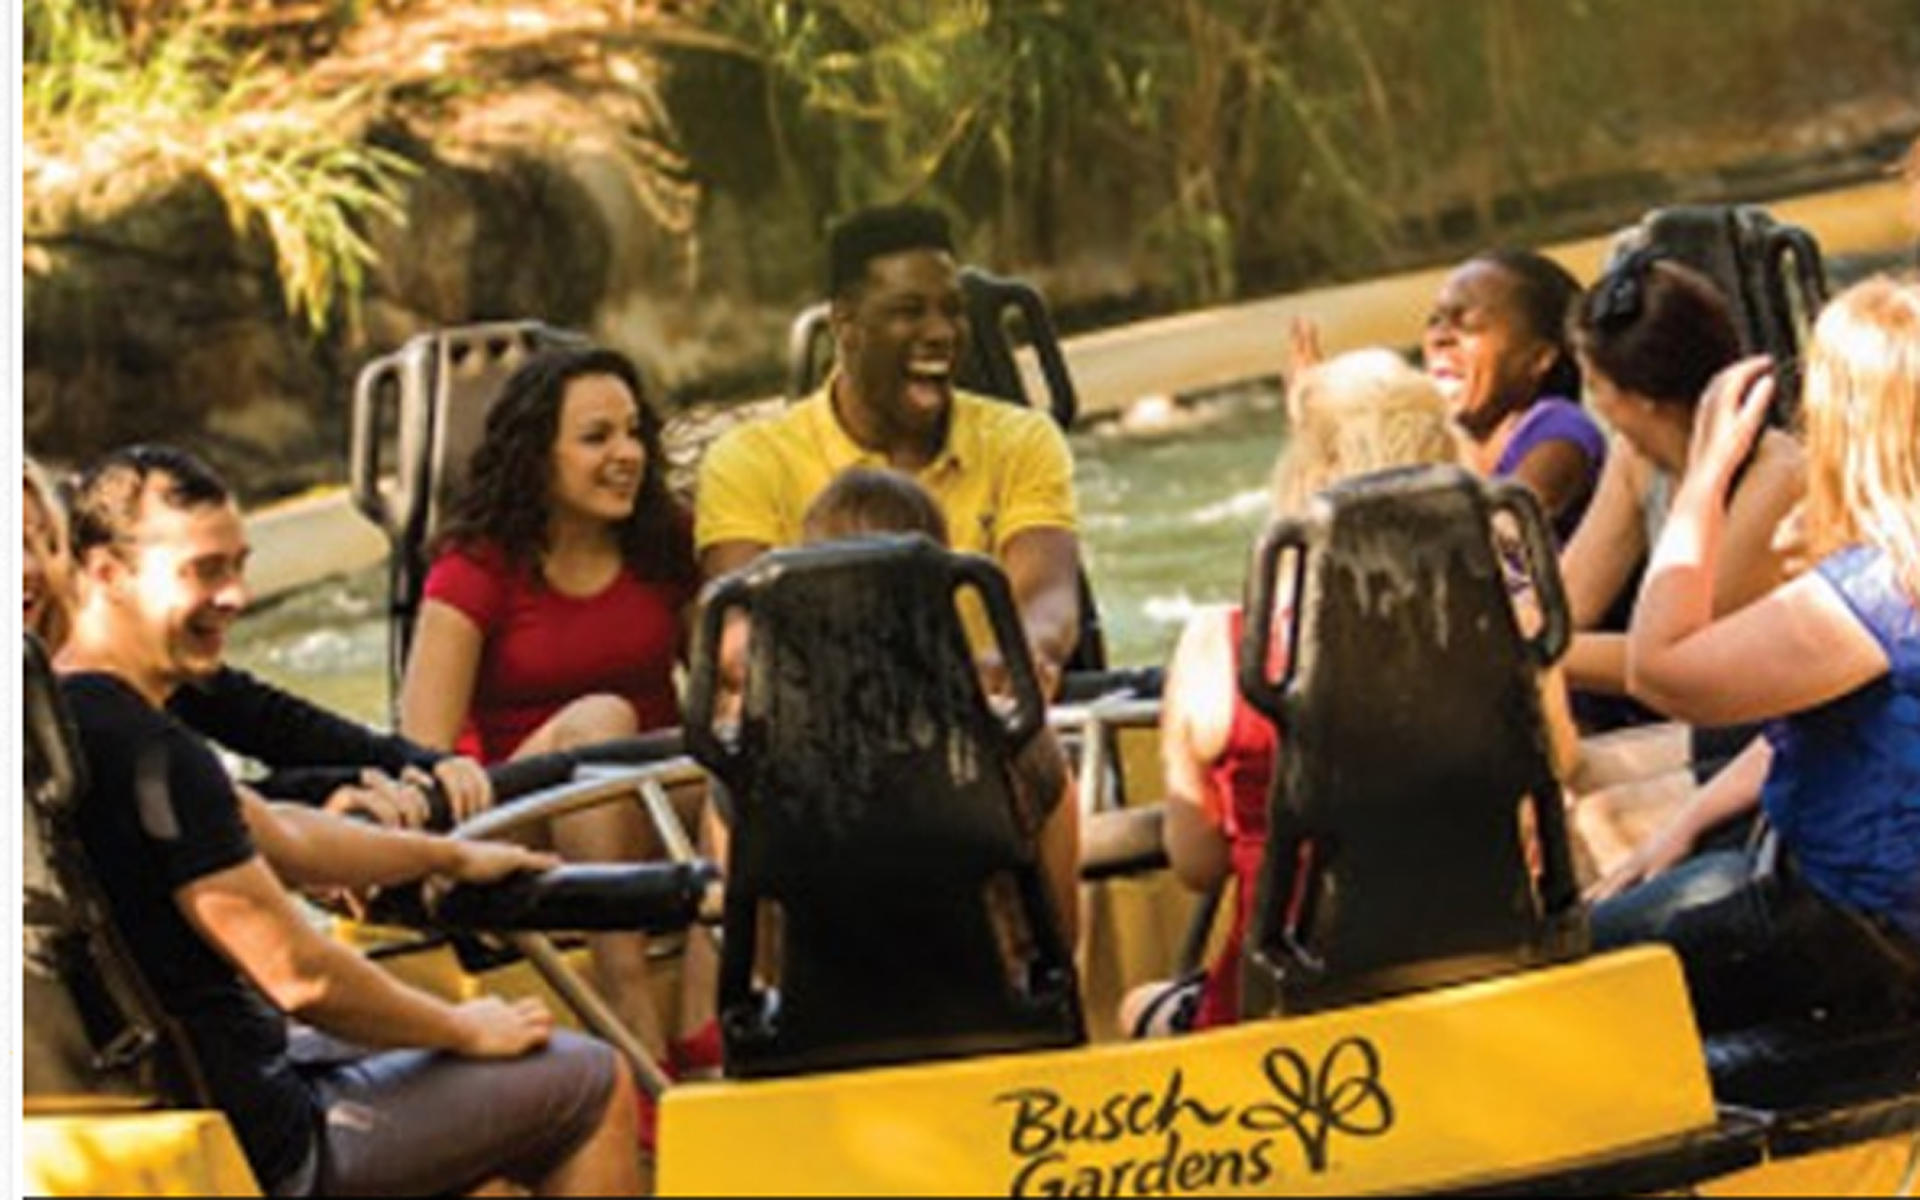 Busch Gardens In Tampa Shuts Congo River Rapids Ride After Fatal